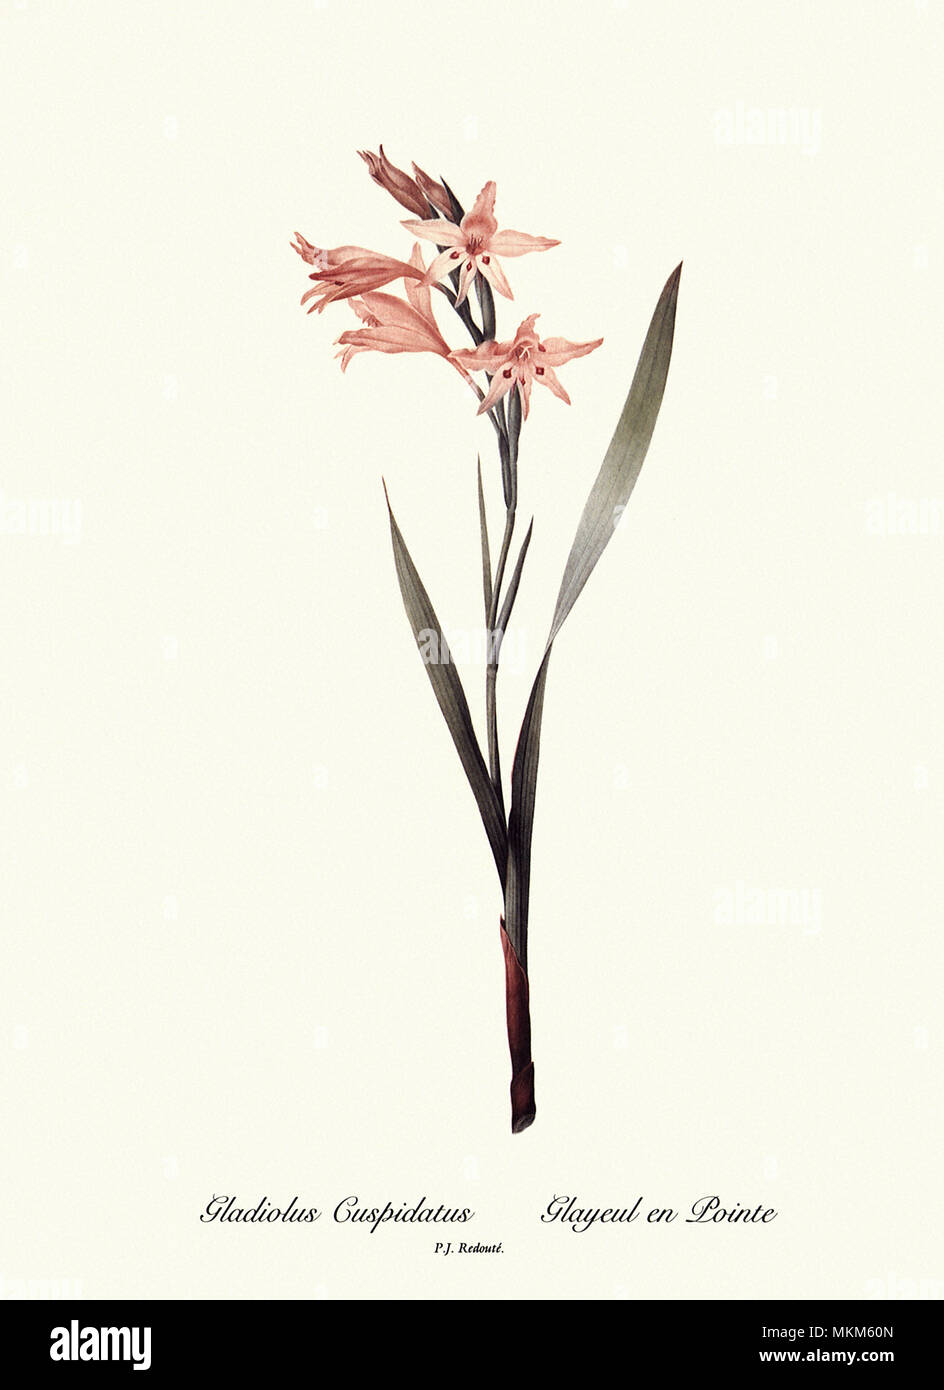 Gladiolus Cuspidatus, Glayeul en Pointe Stock Photo